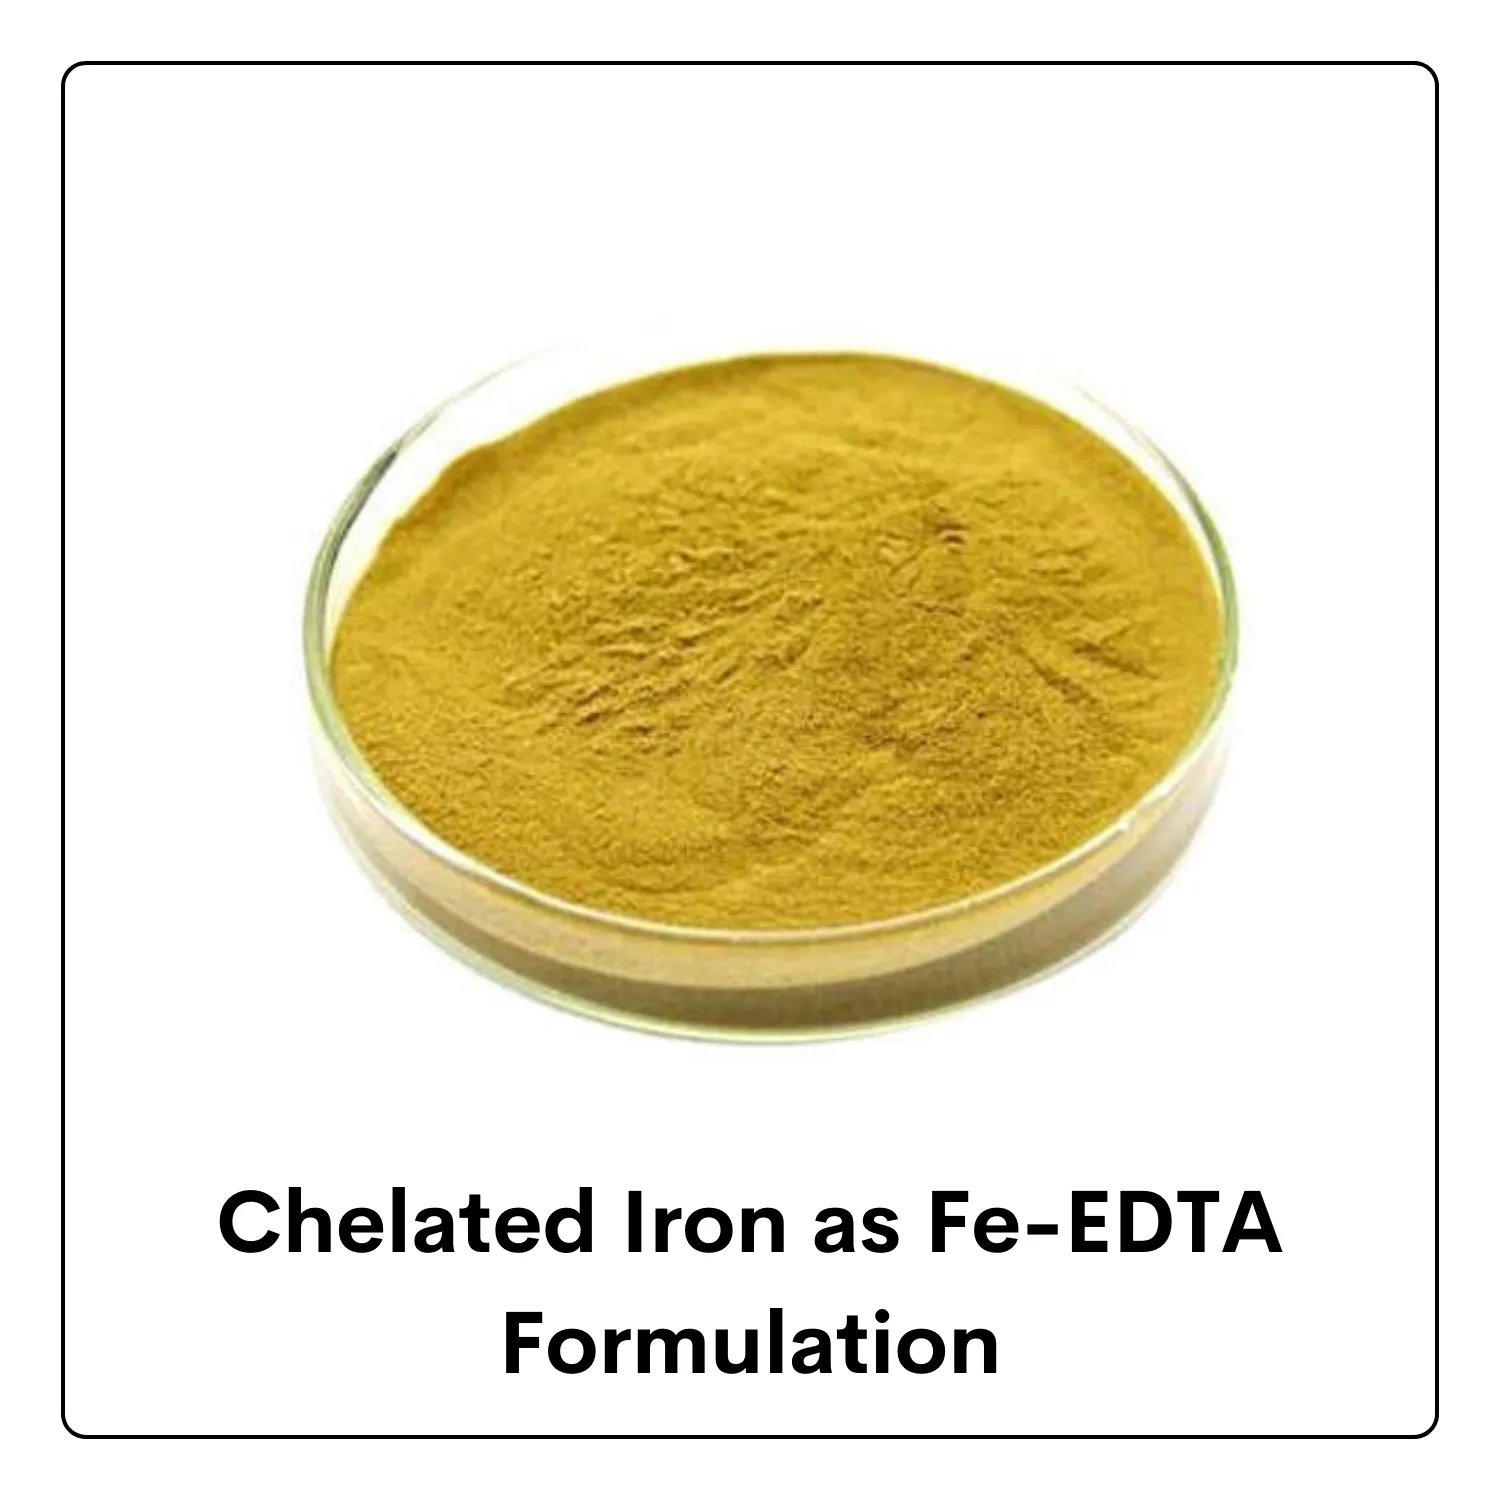 Chelated Iron as Fe-EDTA